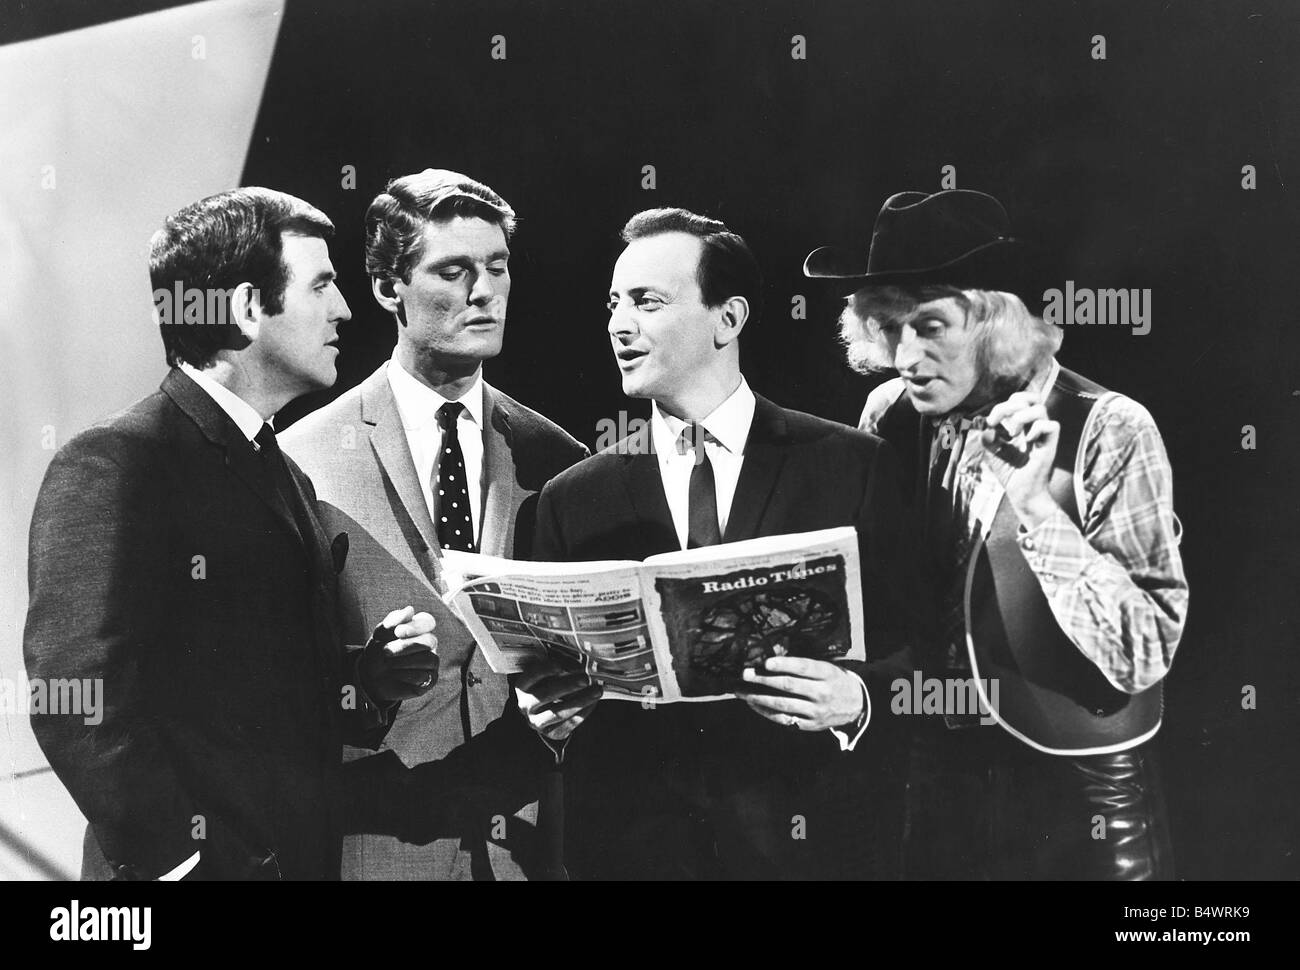 pete-murray-dec-1964-bbc-radio-presenter-dj-with-david-jacobs-alan-B4WRK9.jpg